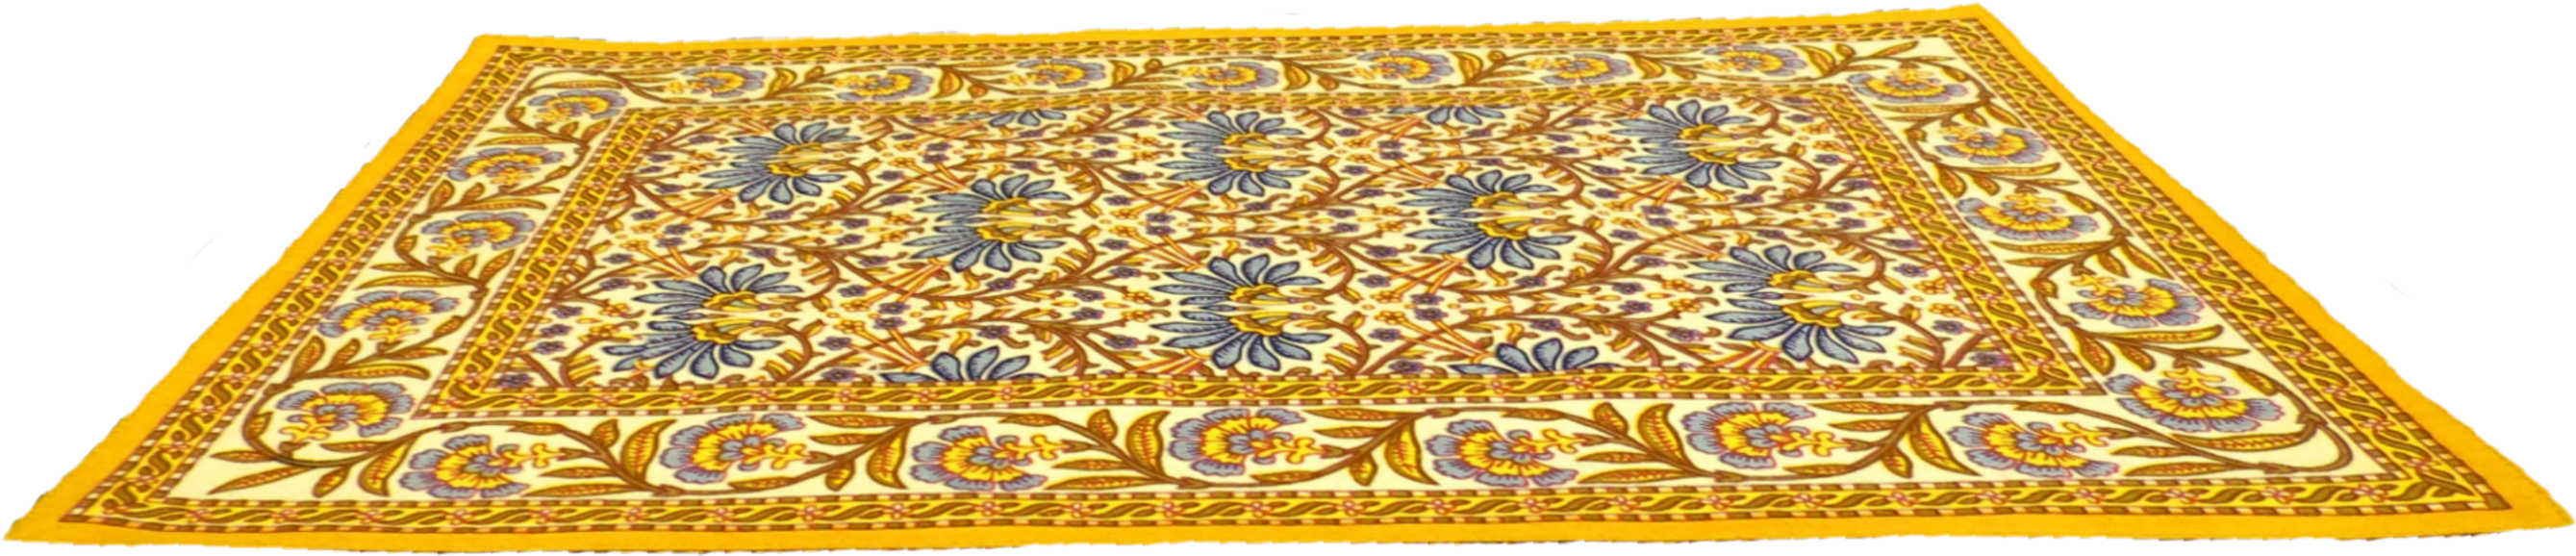 Carpet, Rug Png - Carpet (2926x924), Png Download